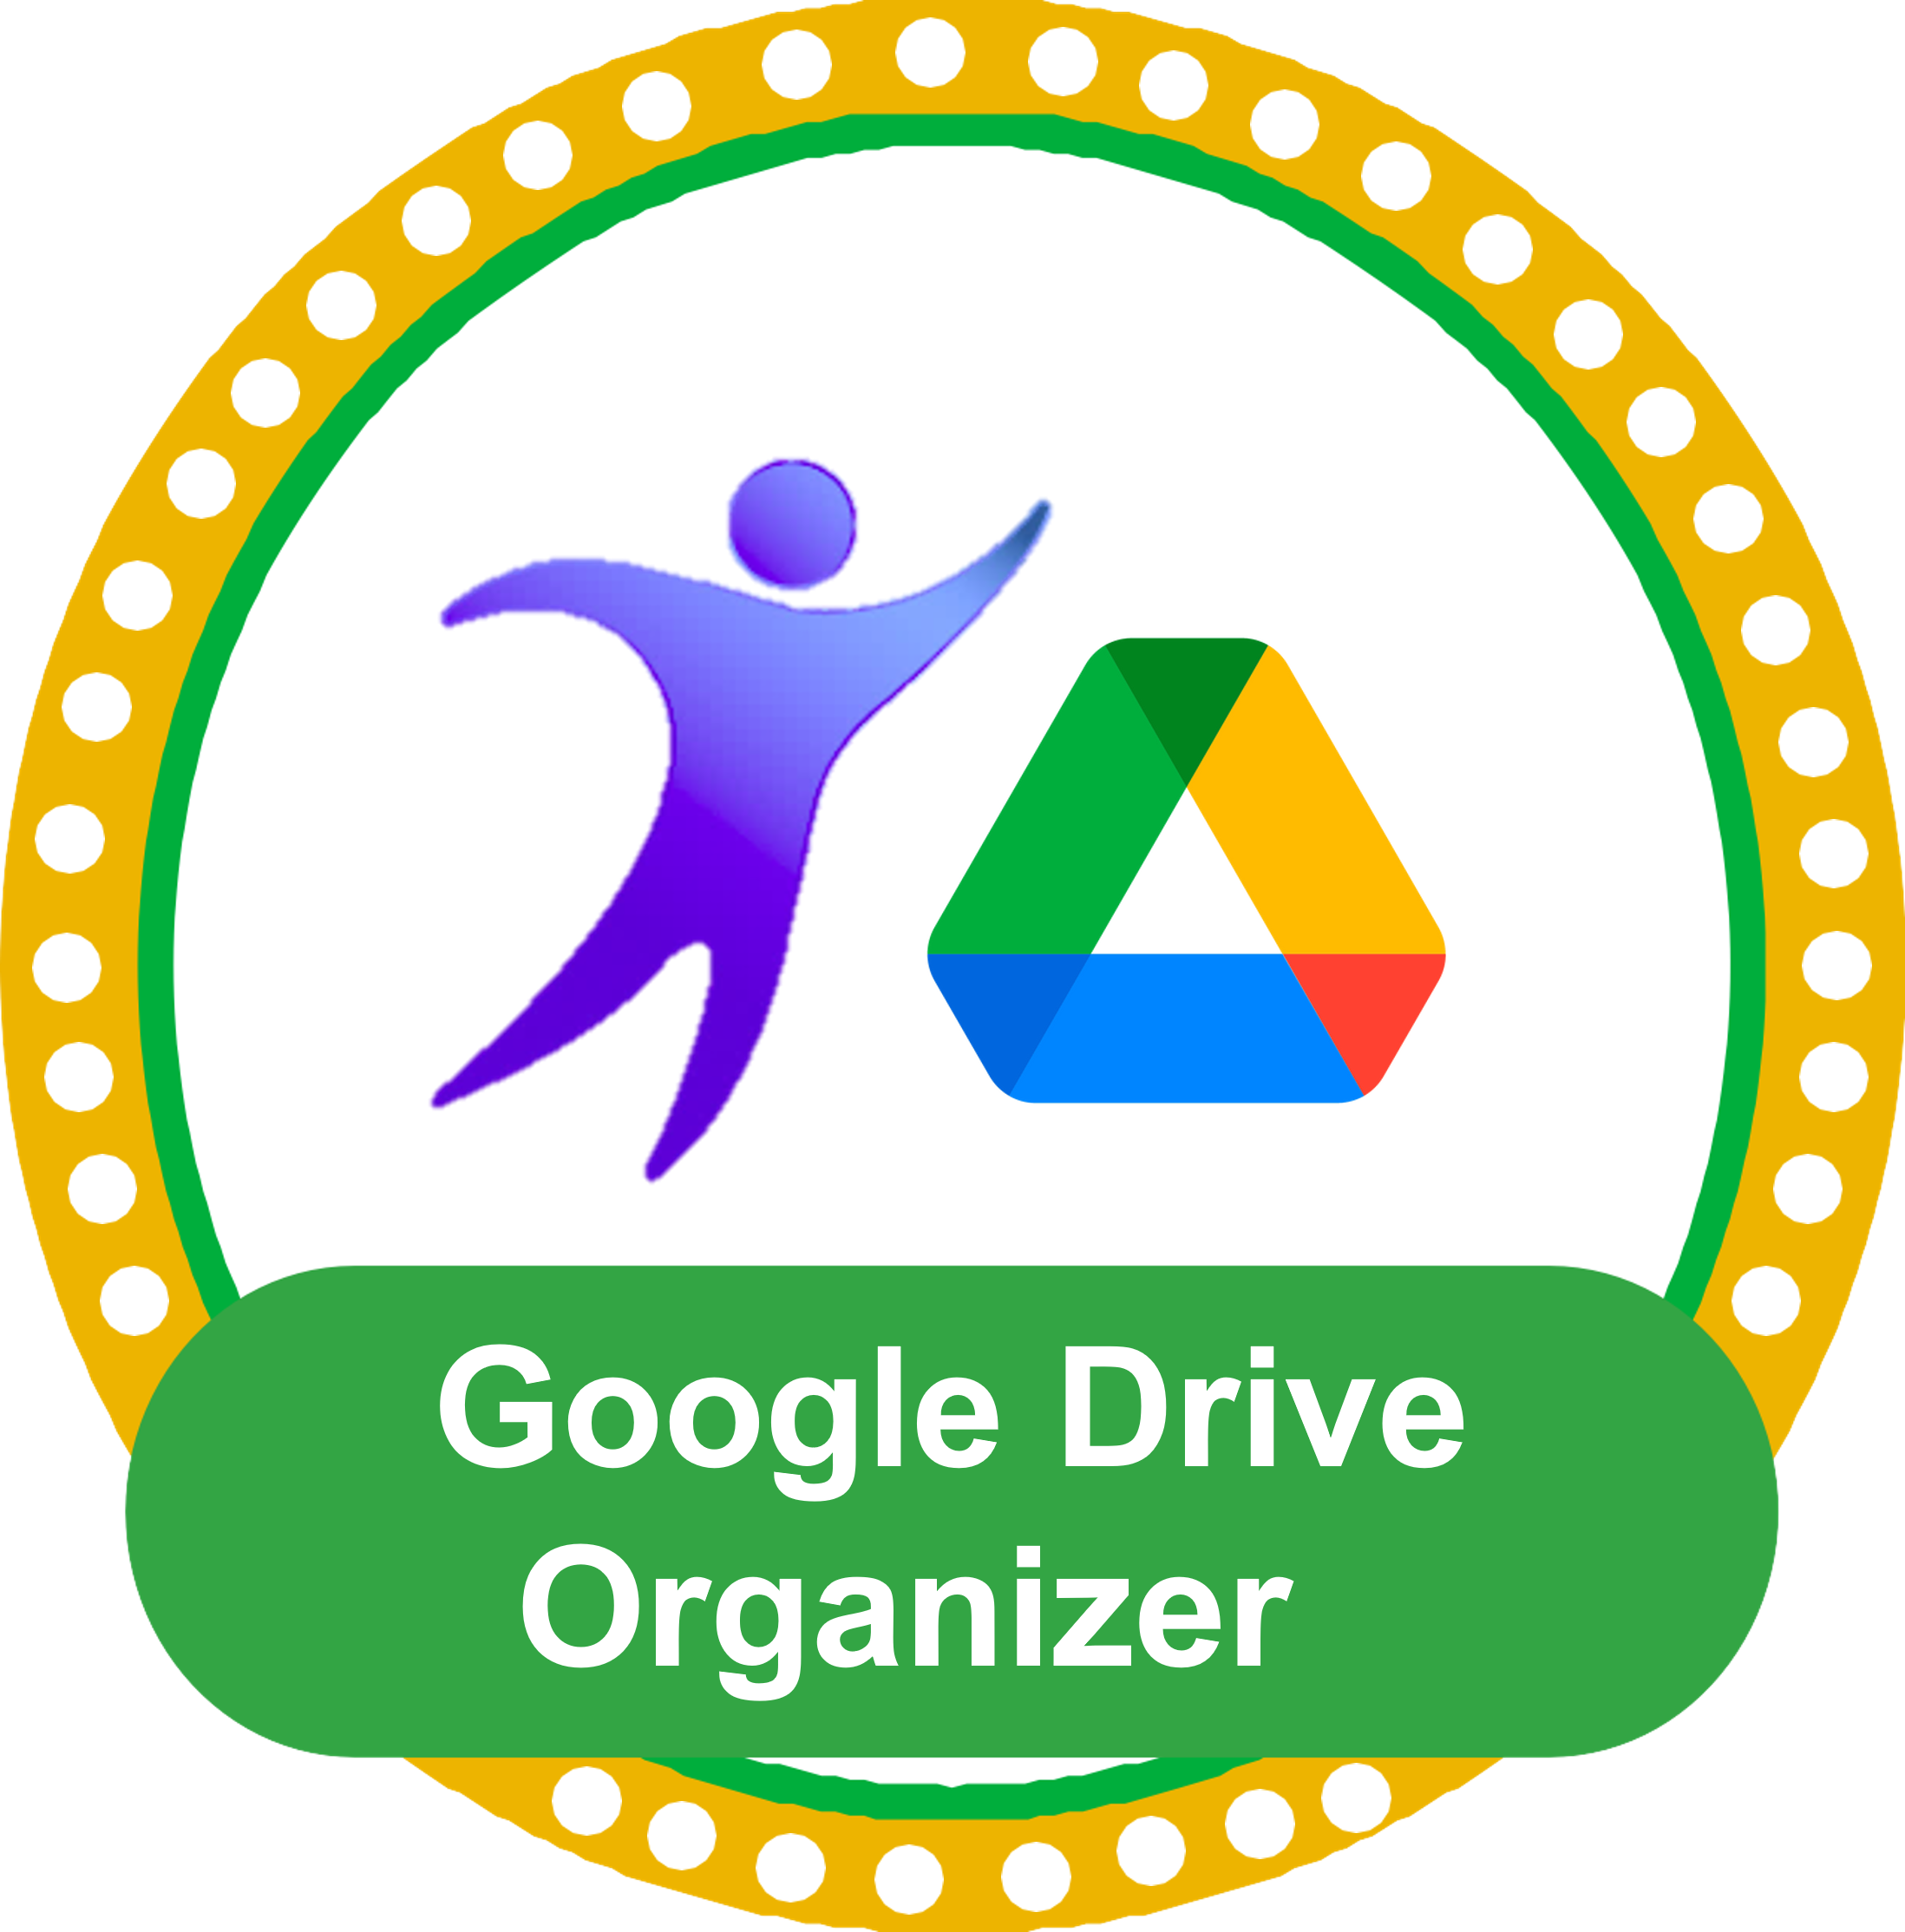 Google Drive Organizer